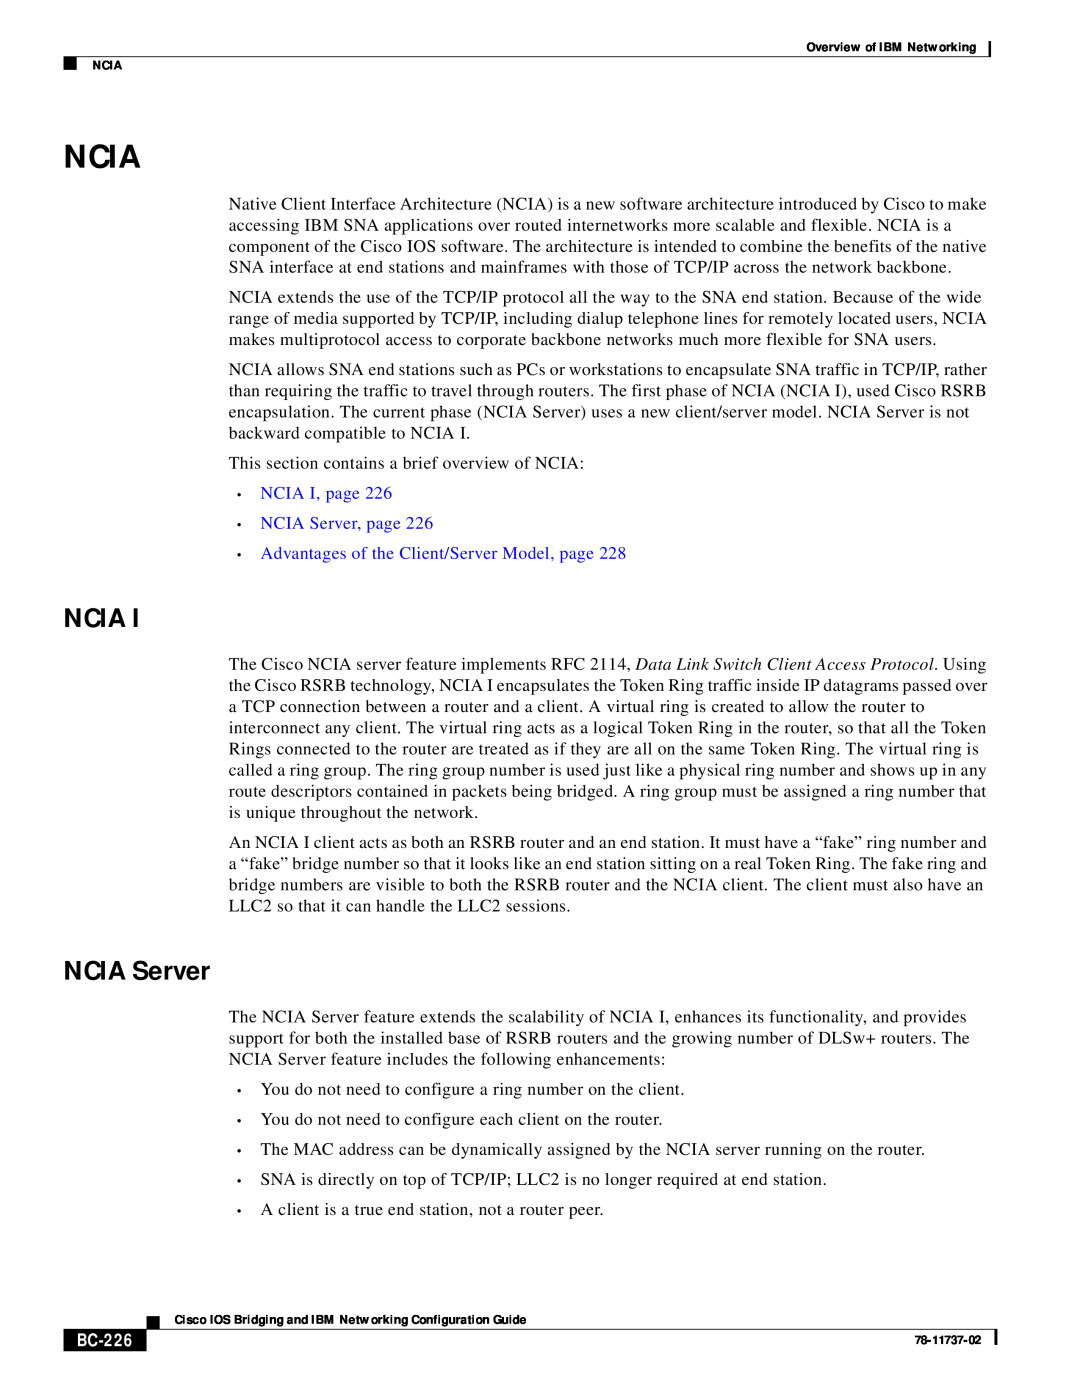 IBM BC-201 manual Ncia, NCIA I, page NCIA Server, page, Advantages of the Client/Server Model, page, BC-226 